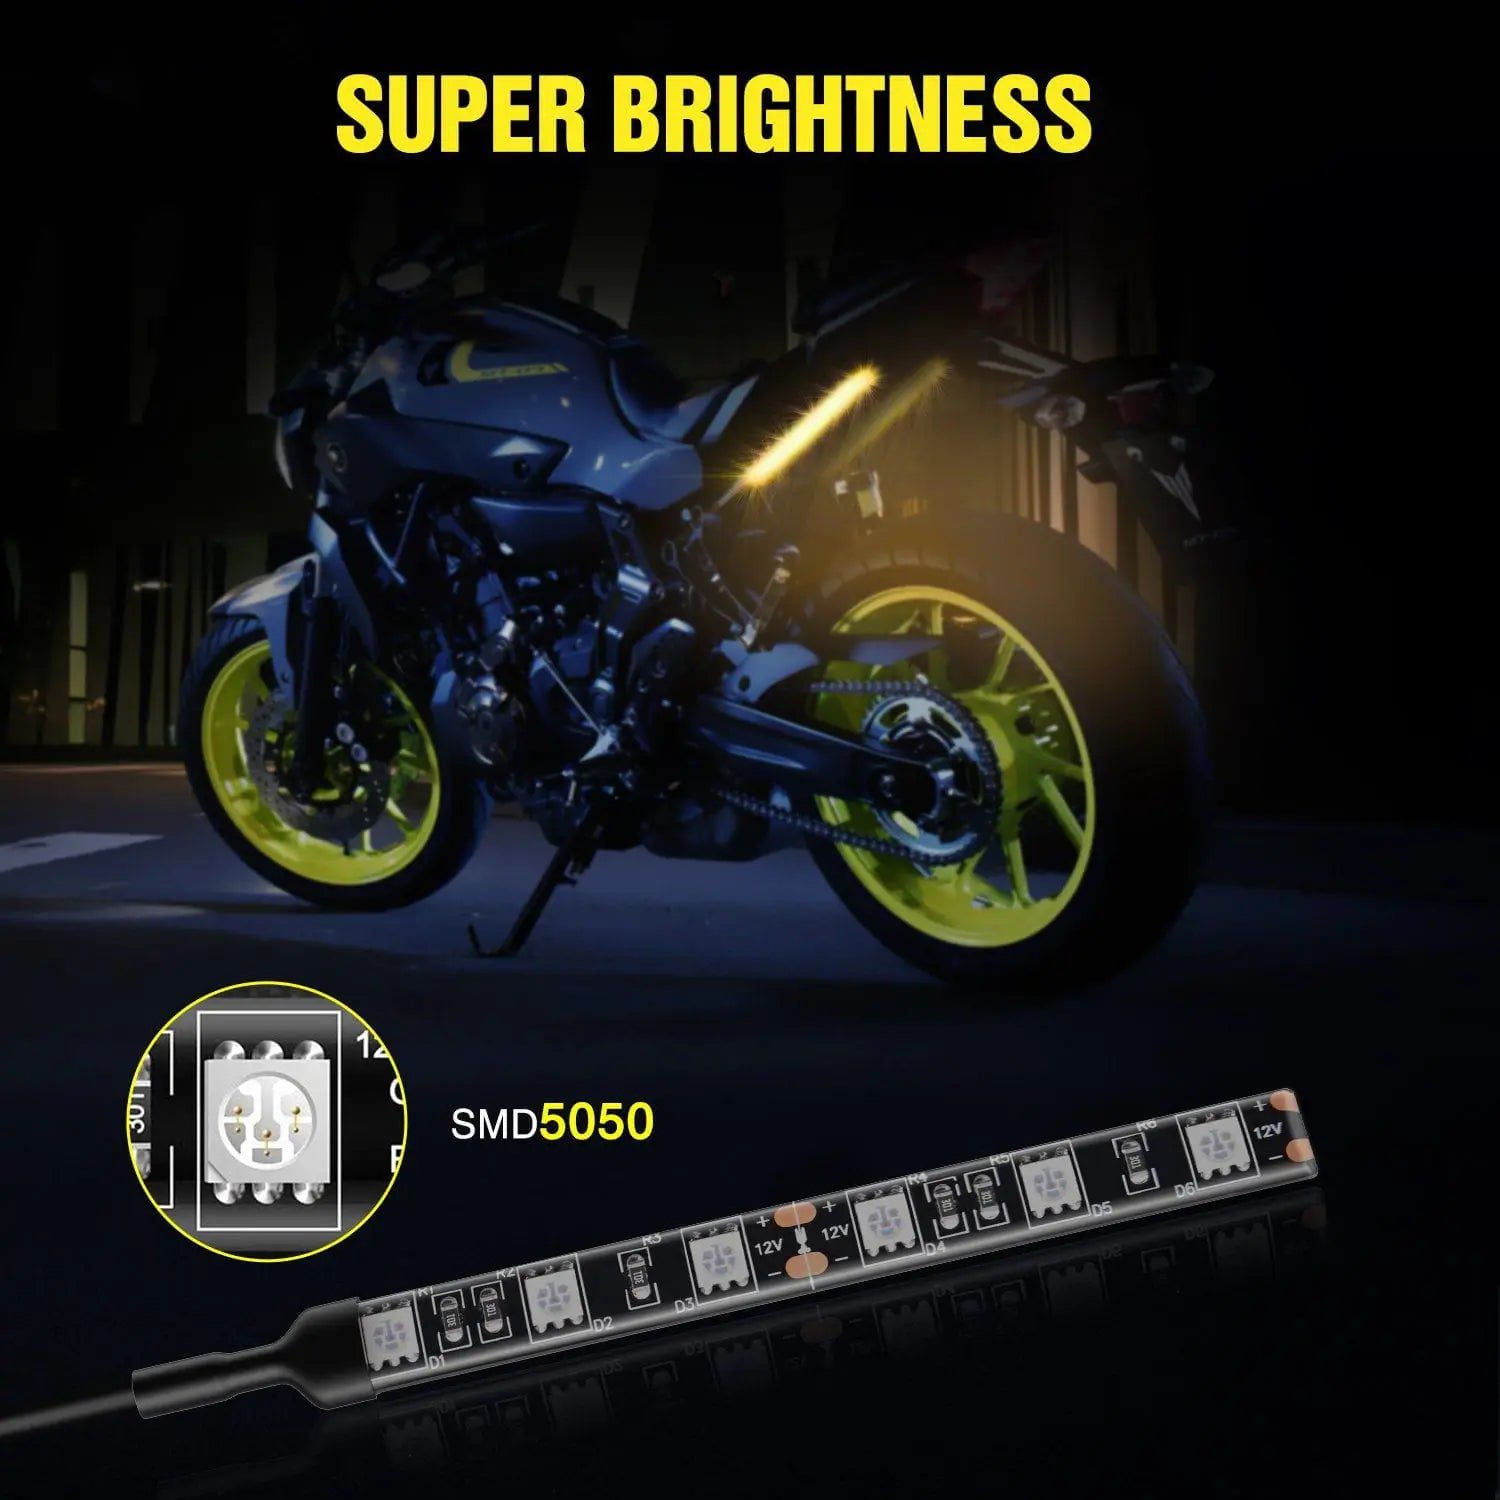 Trailer Light 3.5" 6-5050-SMD Amber LED Light Strip 2PCS